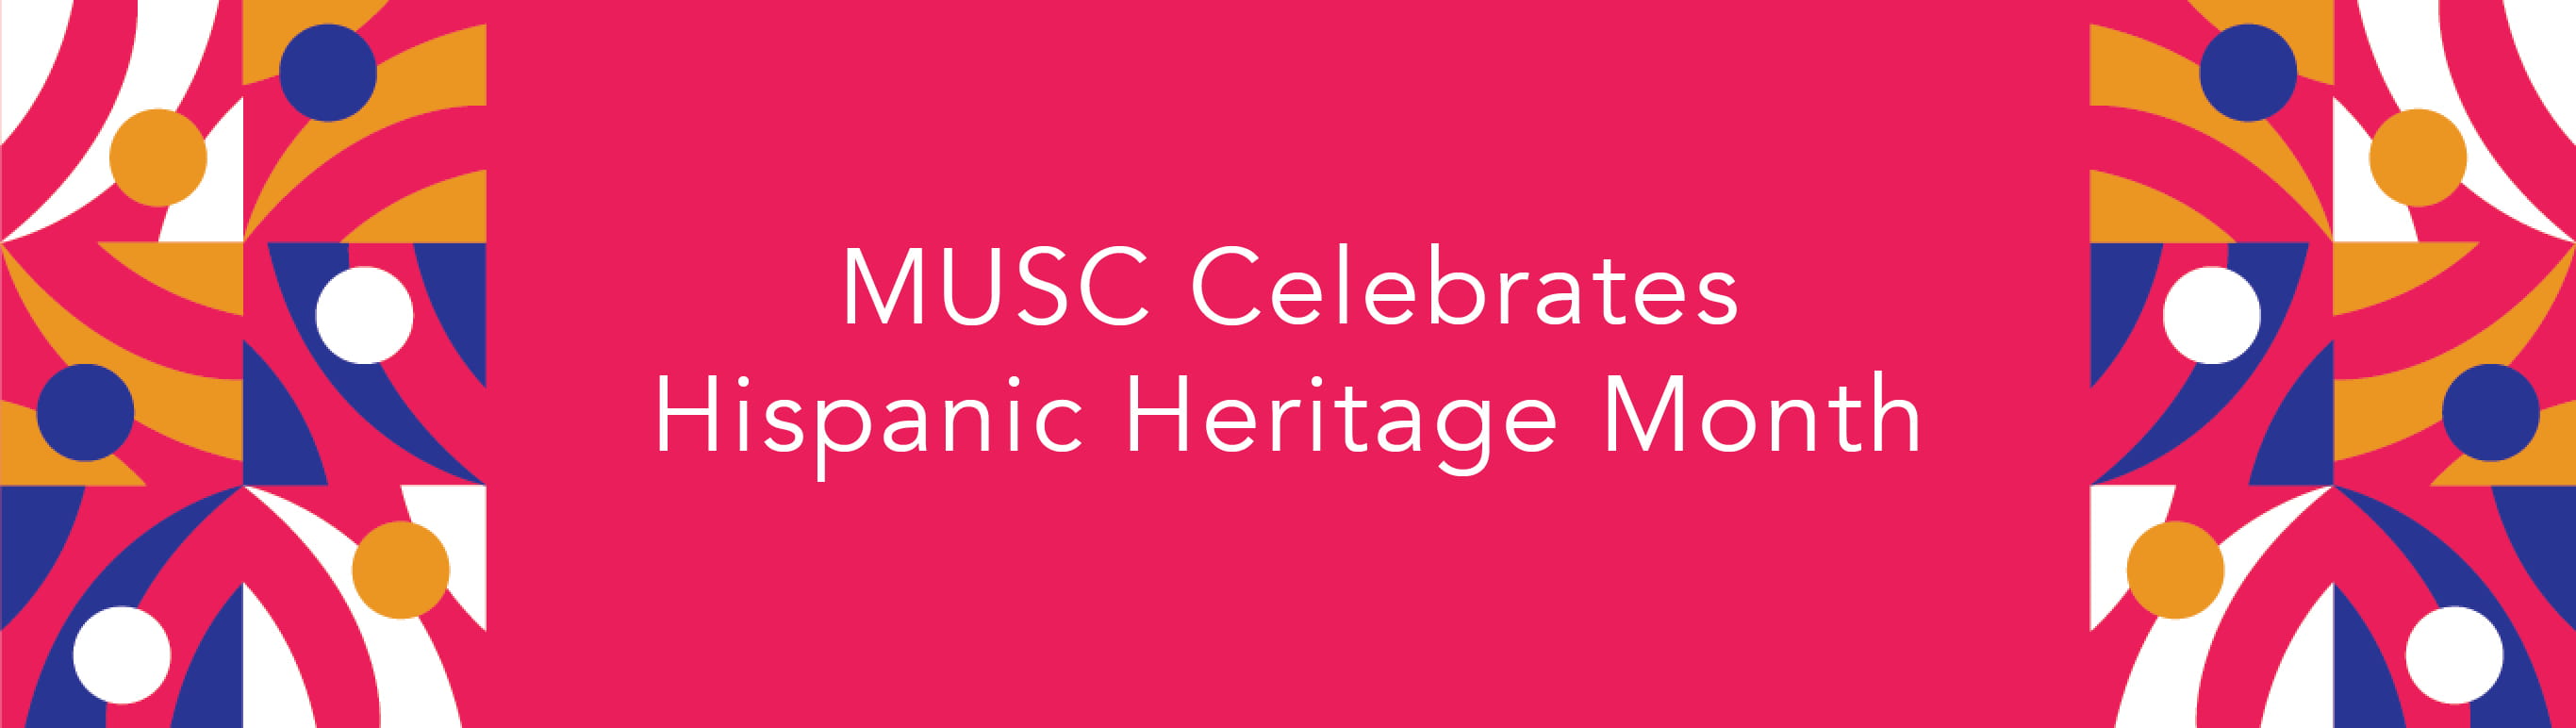 MUSC celebrates Hispanic Heritage Month